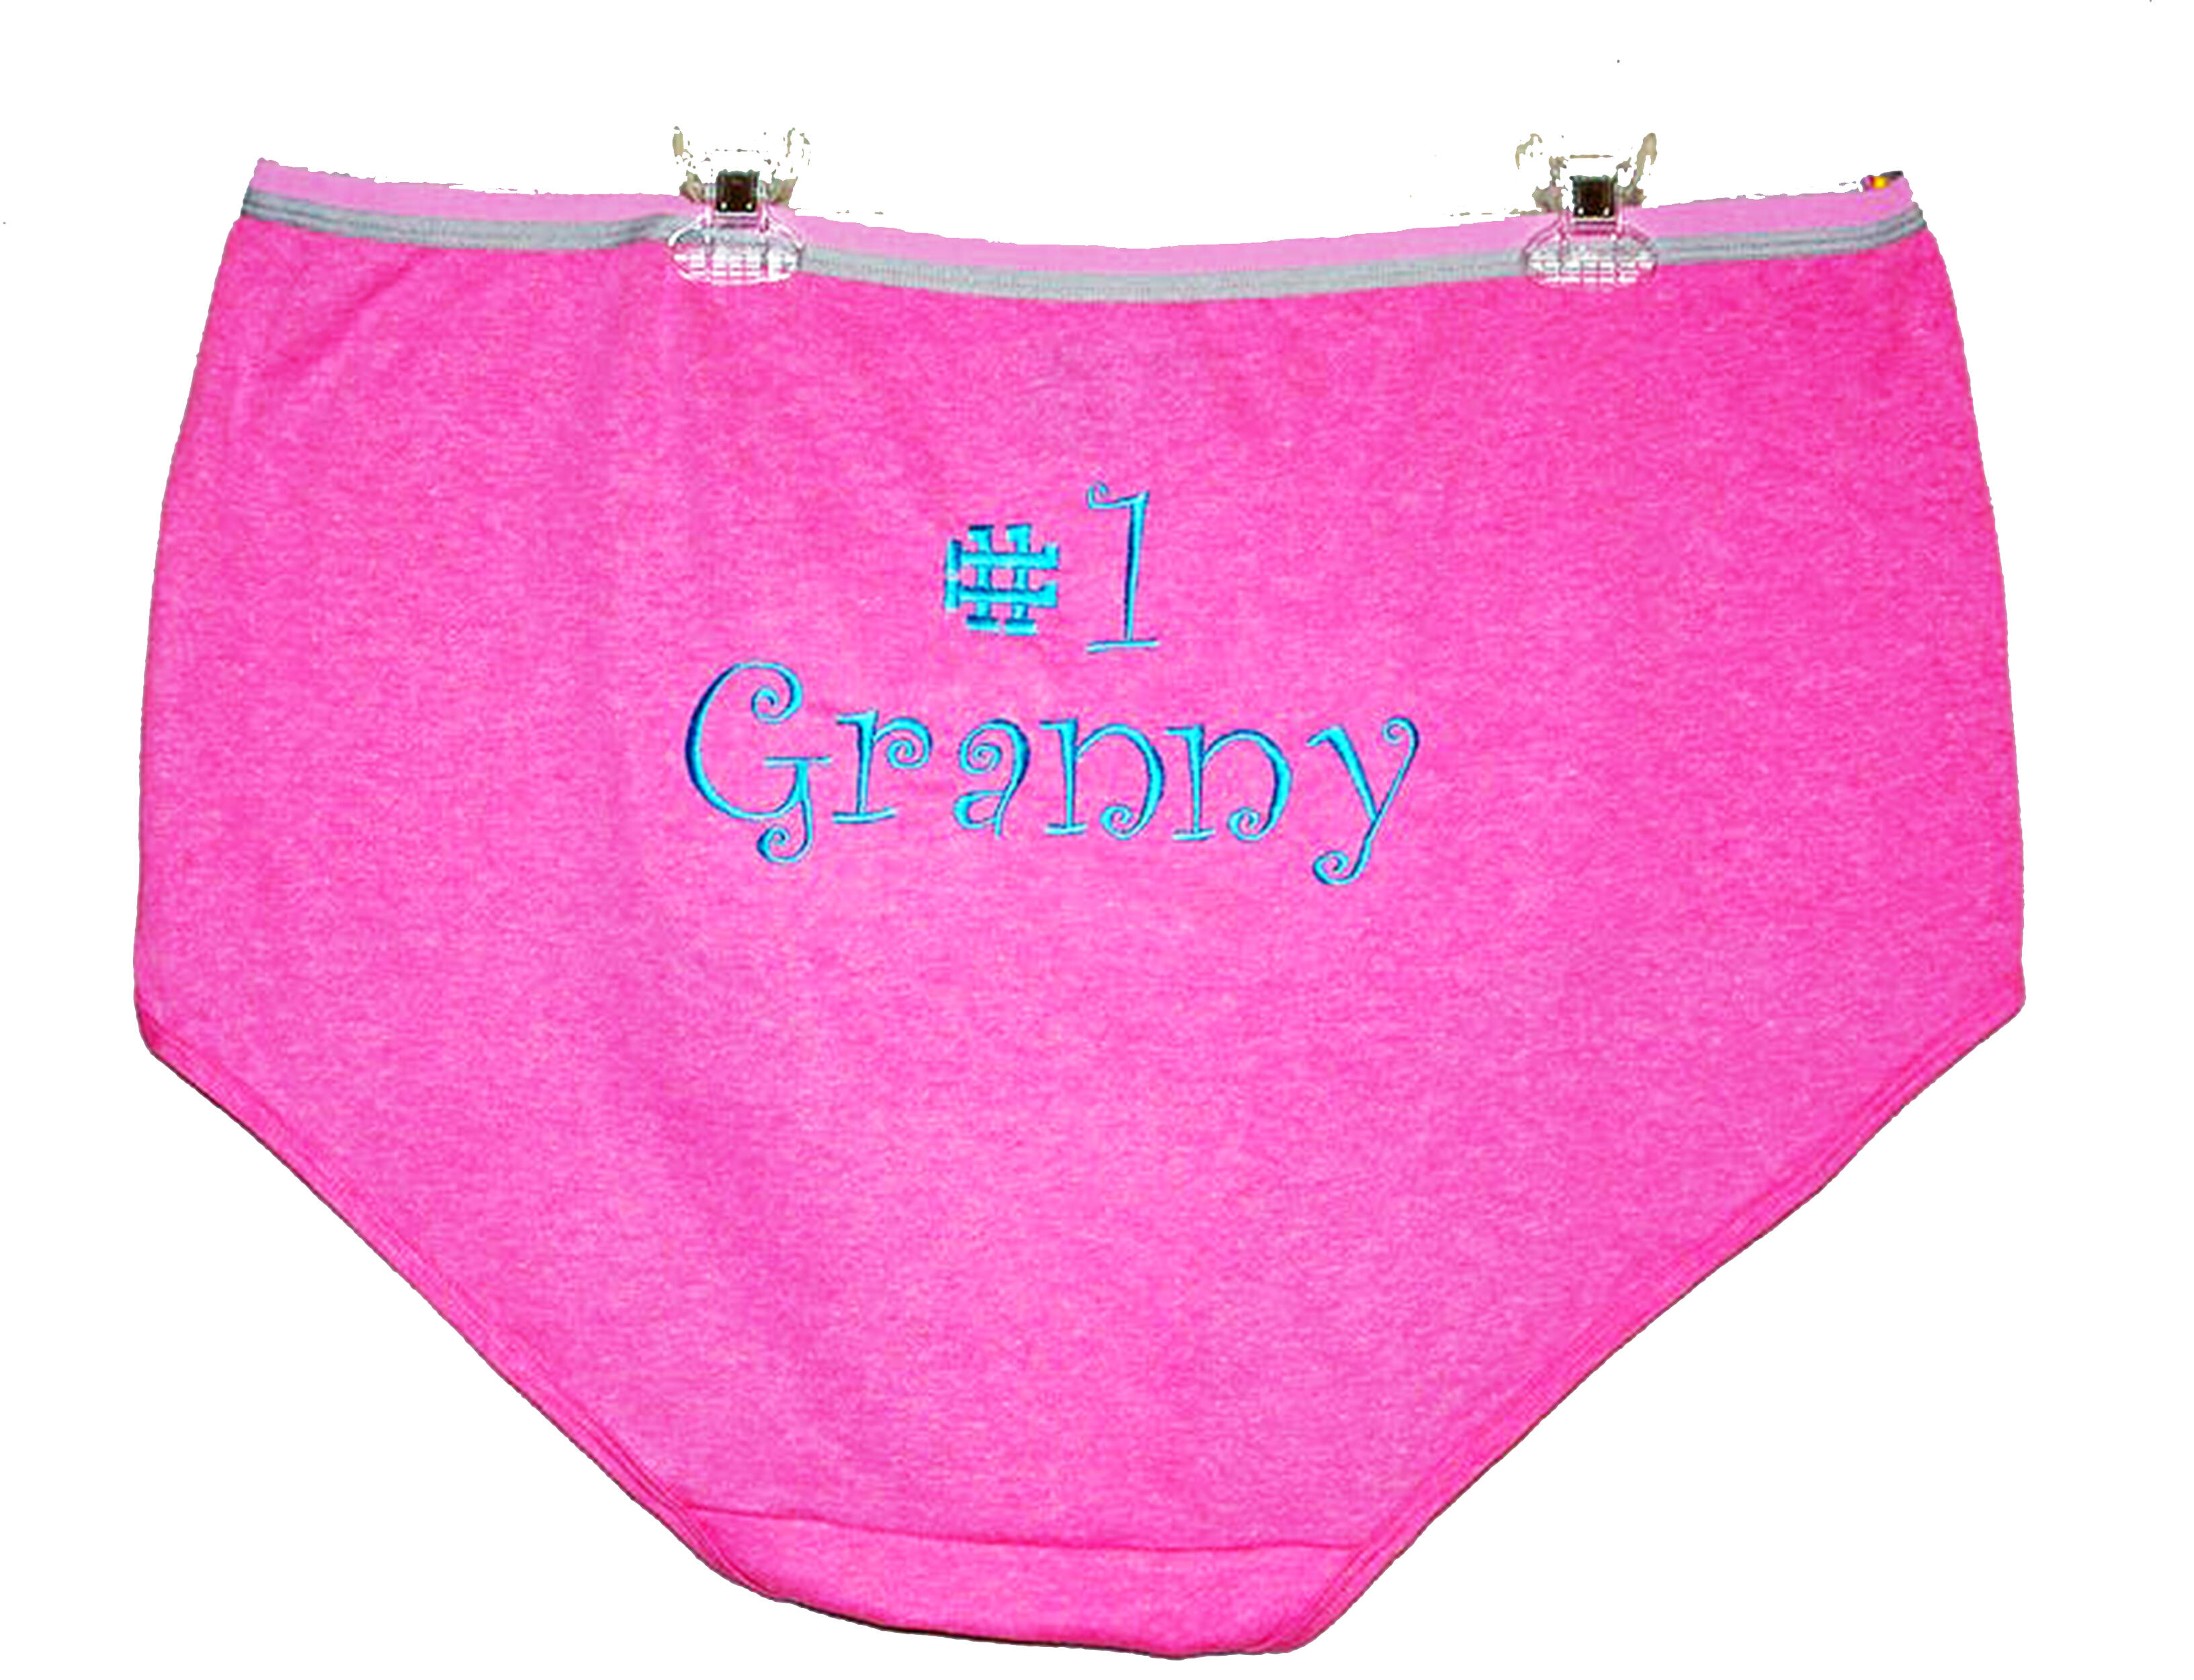 Granny Panties, Large, Gag Gift Exchange, Bridal Shower, Grandma